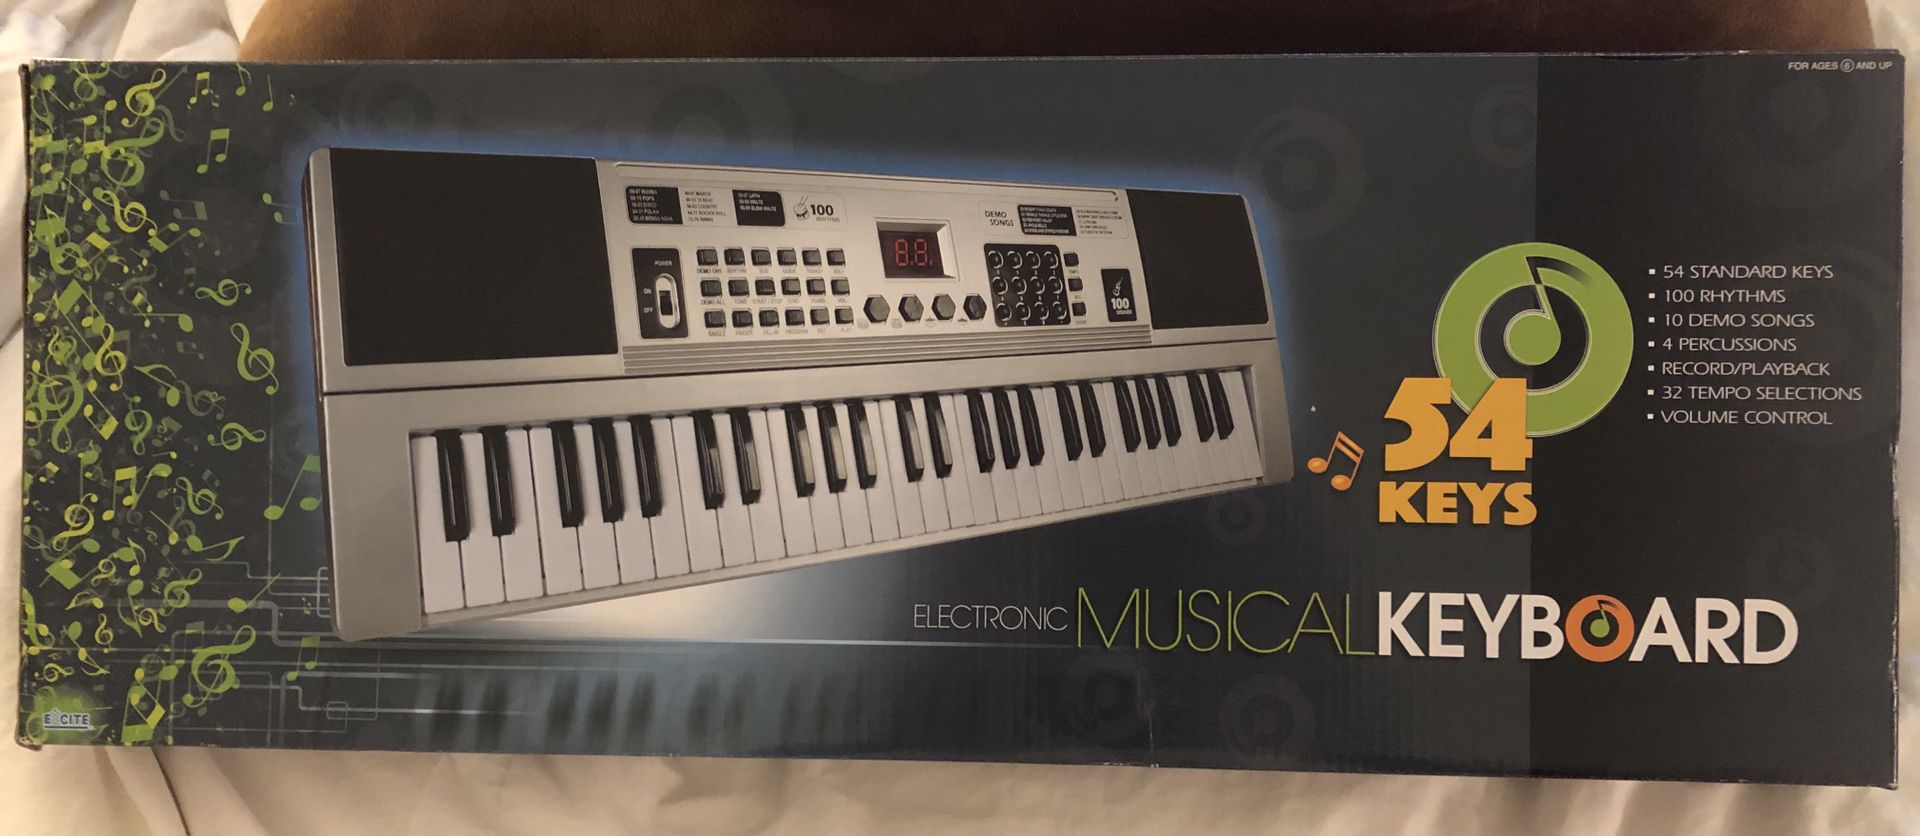 Electronic musical keyboard